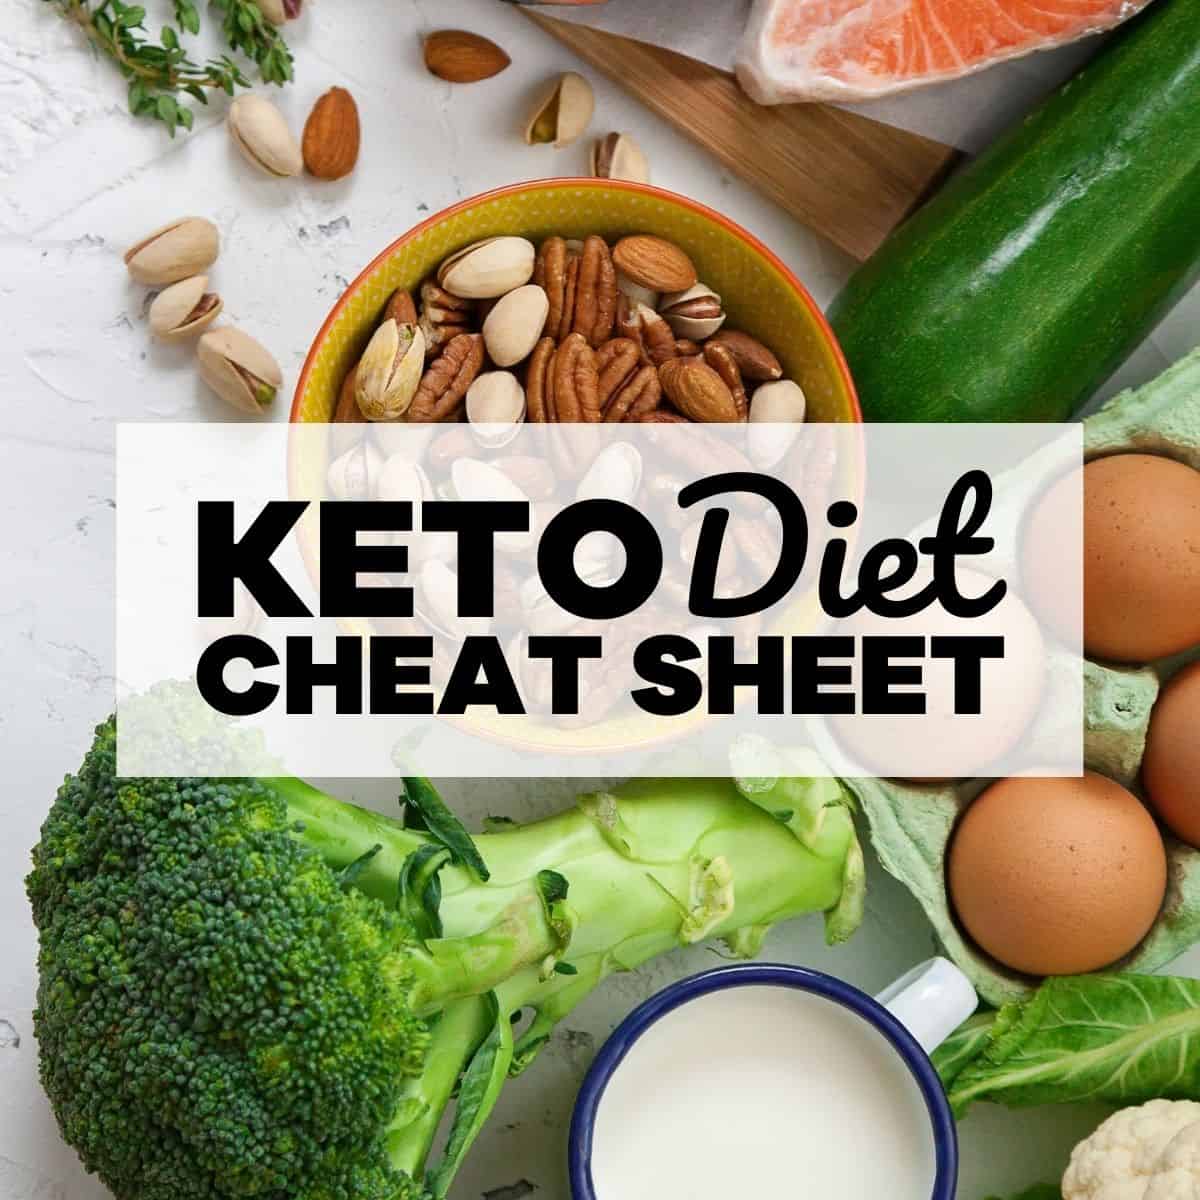 Keto Cheat Sheet to Start Your Keto Diet